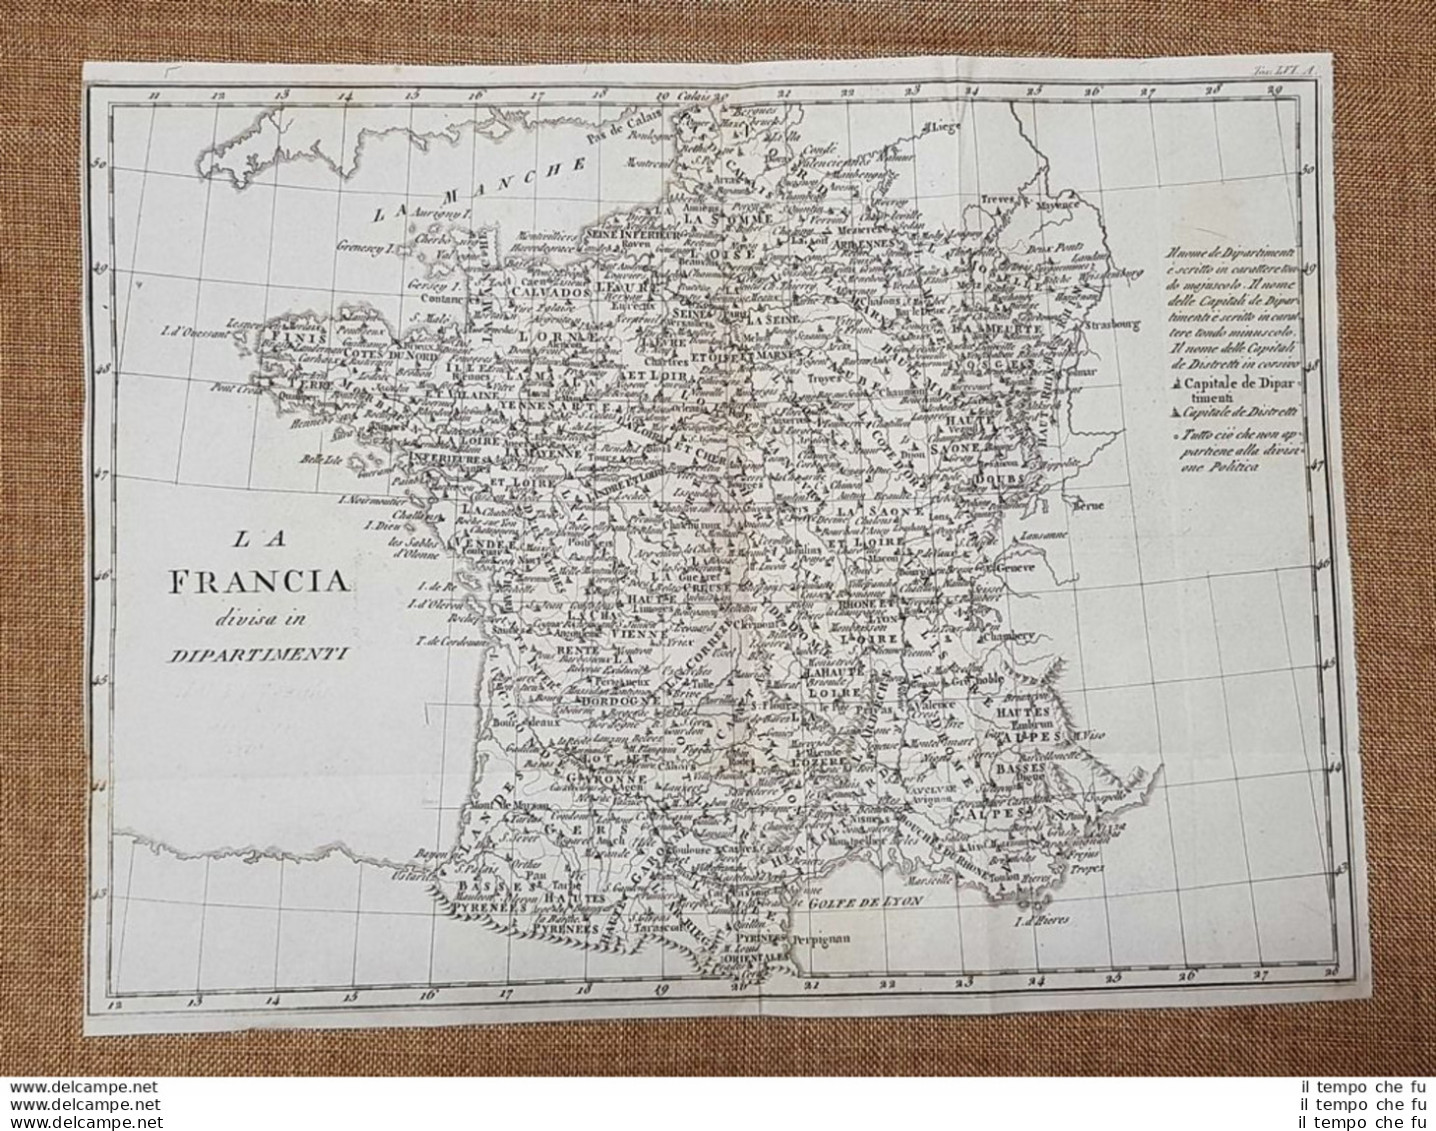 Carta Geografica O Mappa Francia Divisa In Dipartimenti Leonardo Cacciatore 1831 - Cartes Géographiques